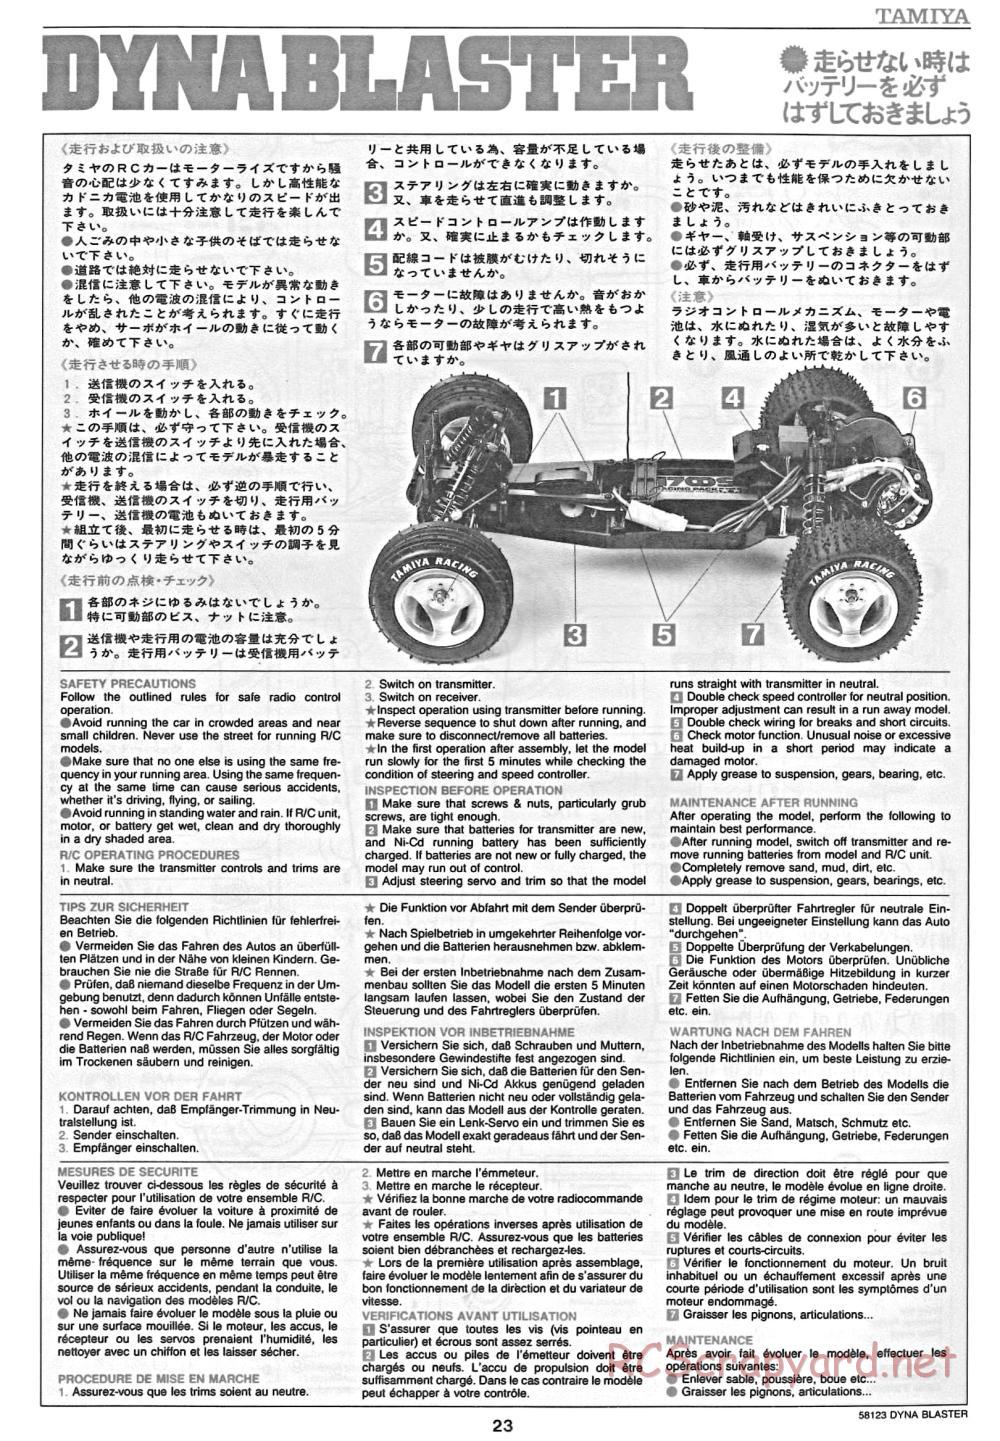 Tamiya - Dyna Blaster Chassis - Manual - Page 23